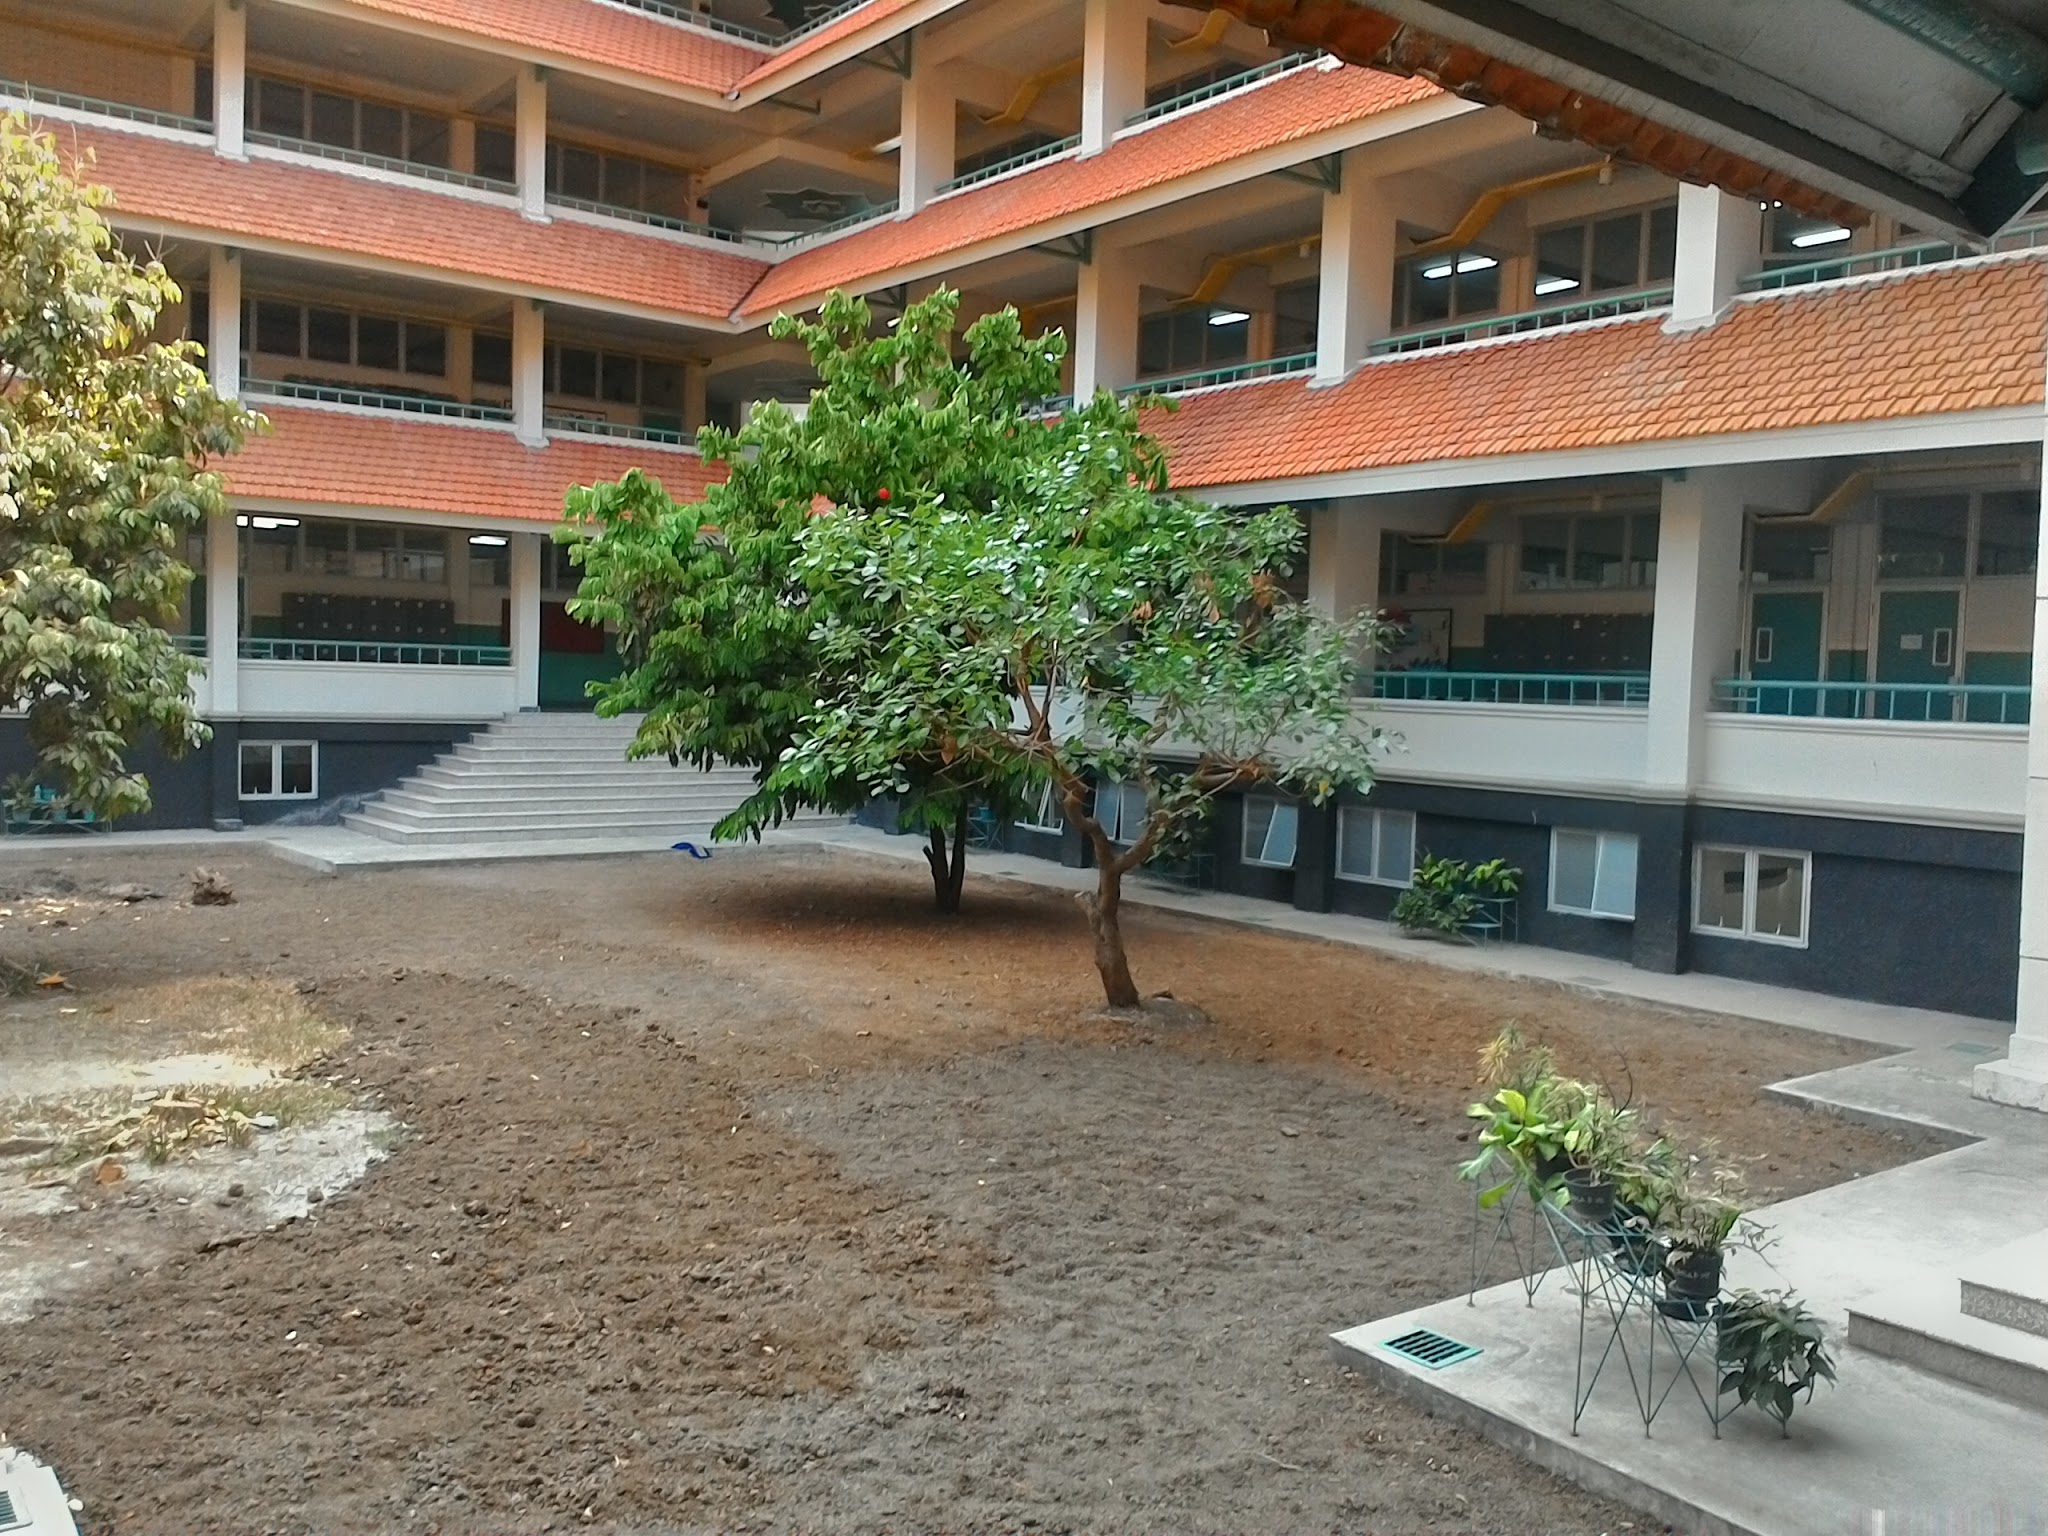 Foto SMA  Al Hikmah Surabaya, Kota Surabaya